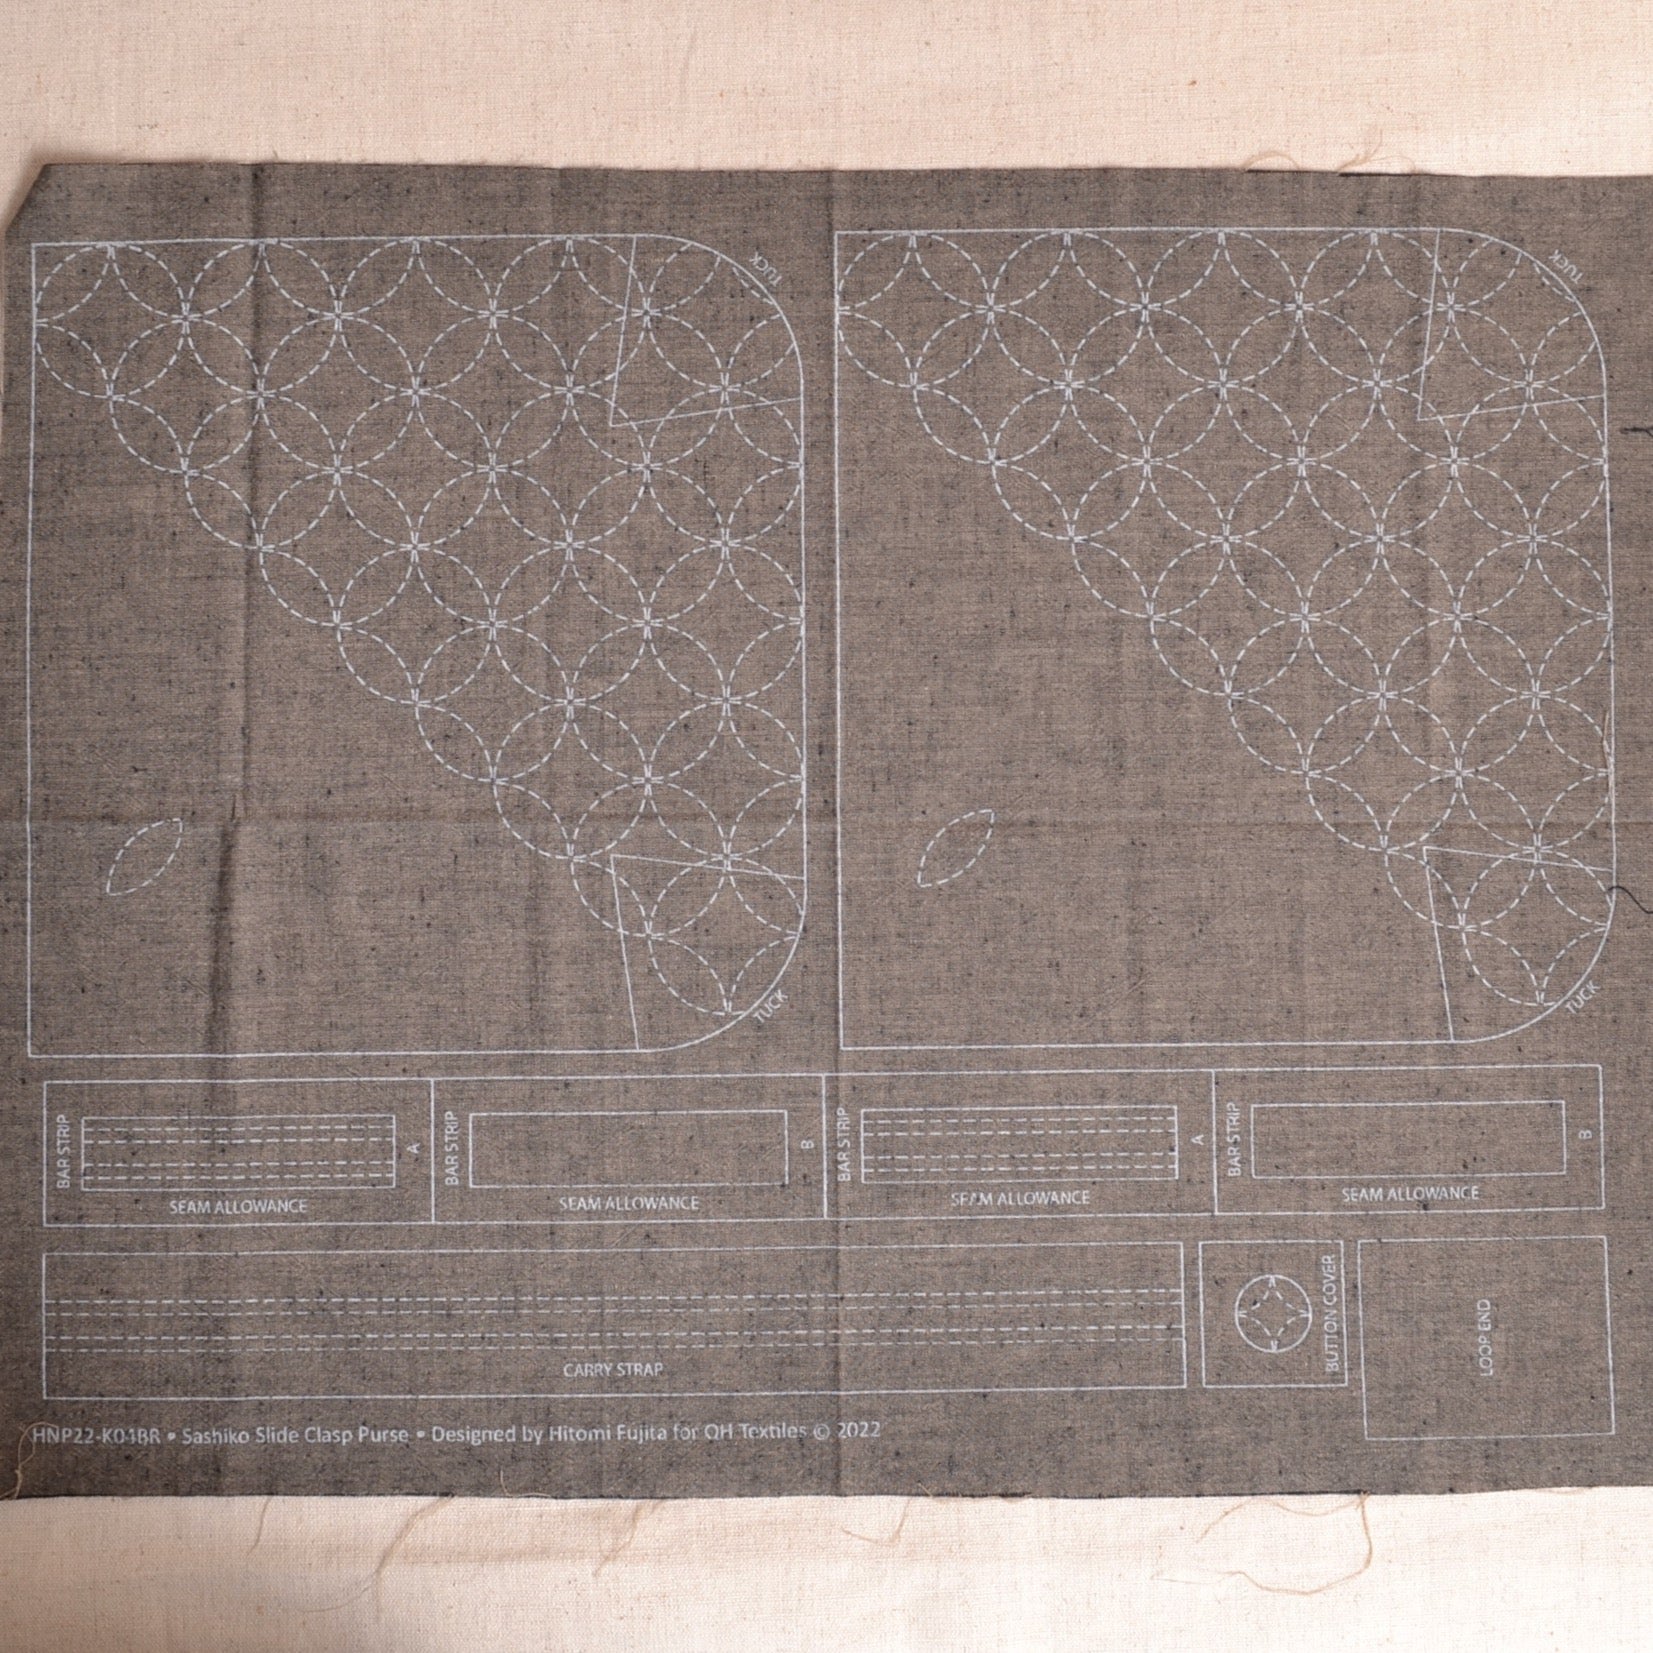 Sashiko Slide Clasp Pouch Kit, Earth Brown Cotton Fabric